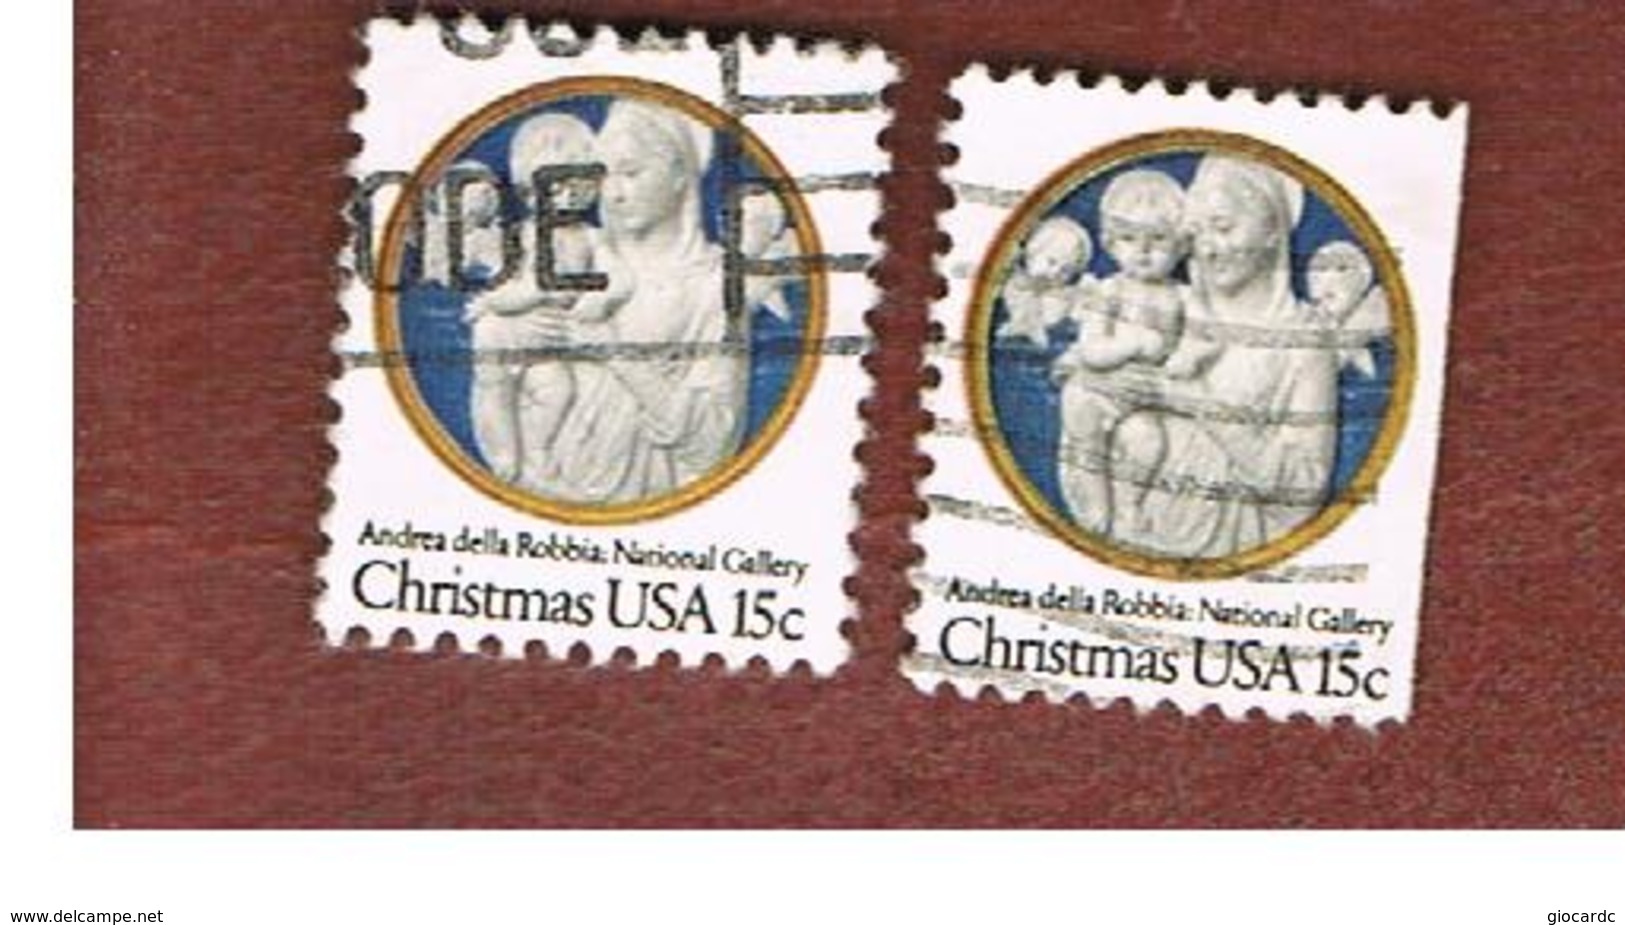 STATI UNITI (U.S.A.) - SG 1741  -  1978   CHRISTMAS (2 DIFFERENT PERFORATIONS)            -  USED - Usati